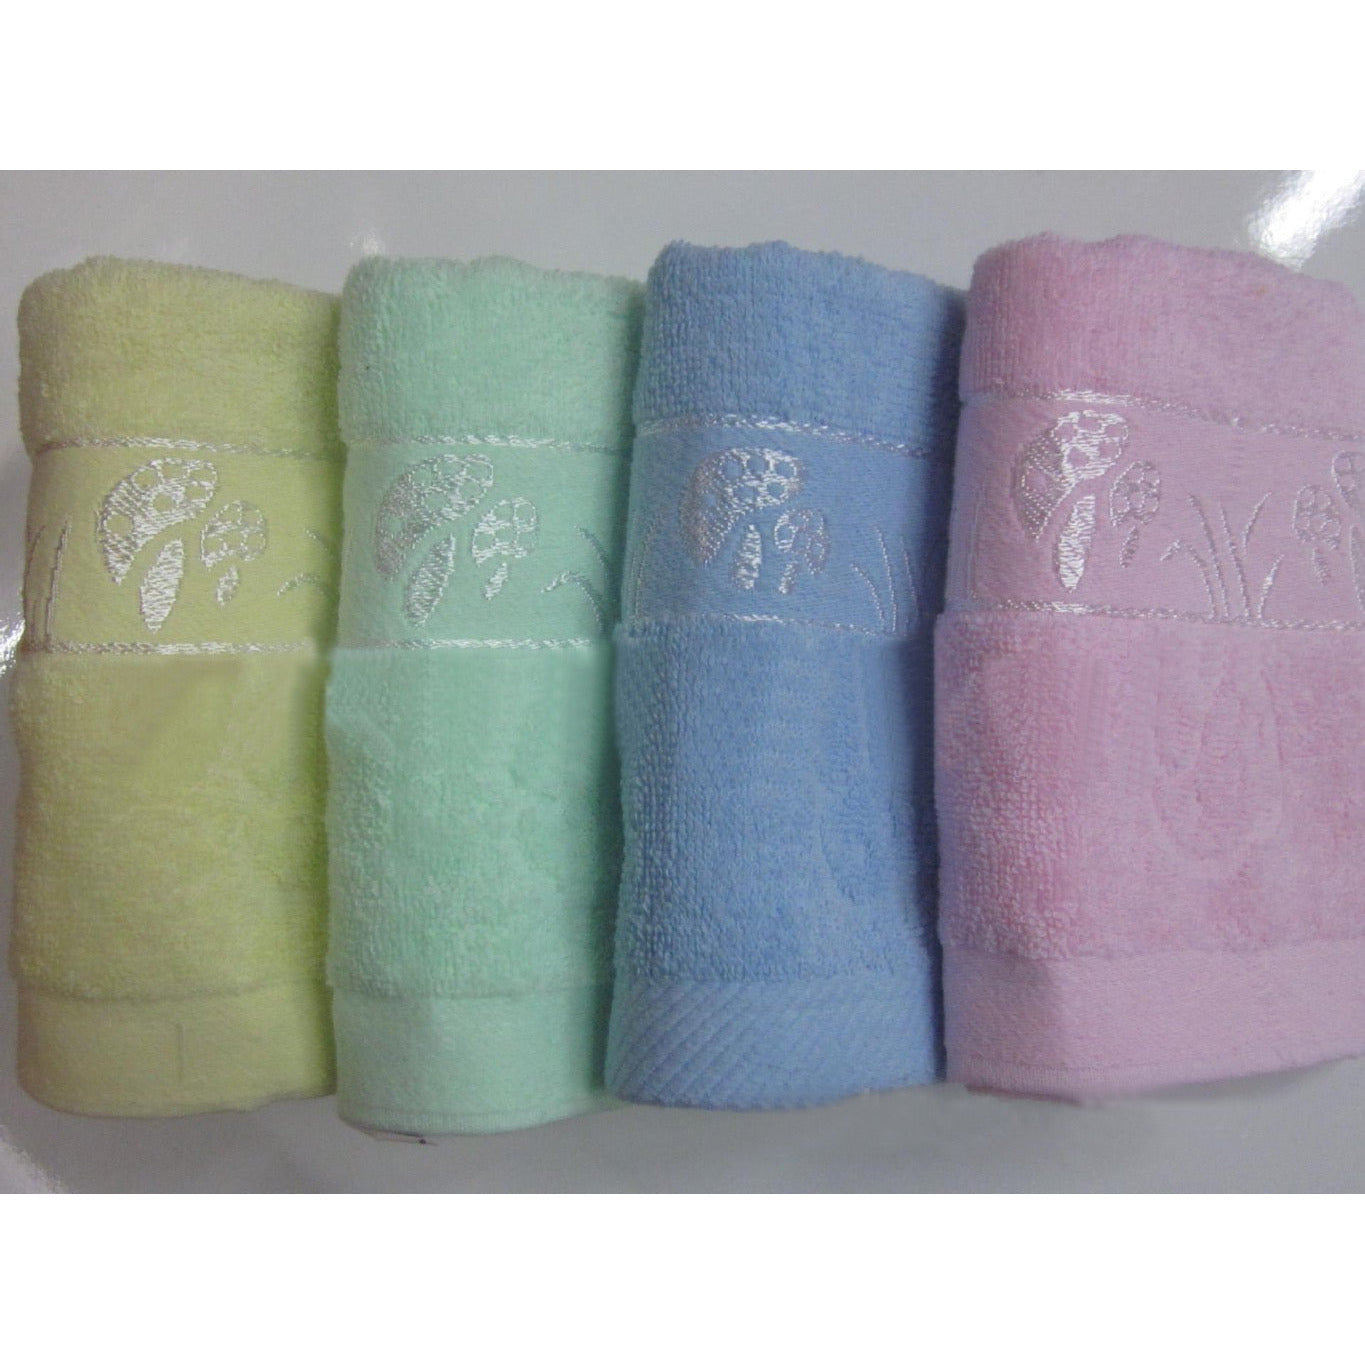 1- Mushroom towels, 3 pieces 34x75cm (random hair: green, pink, yellow, blue, orange)